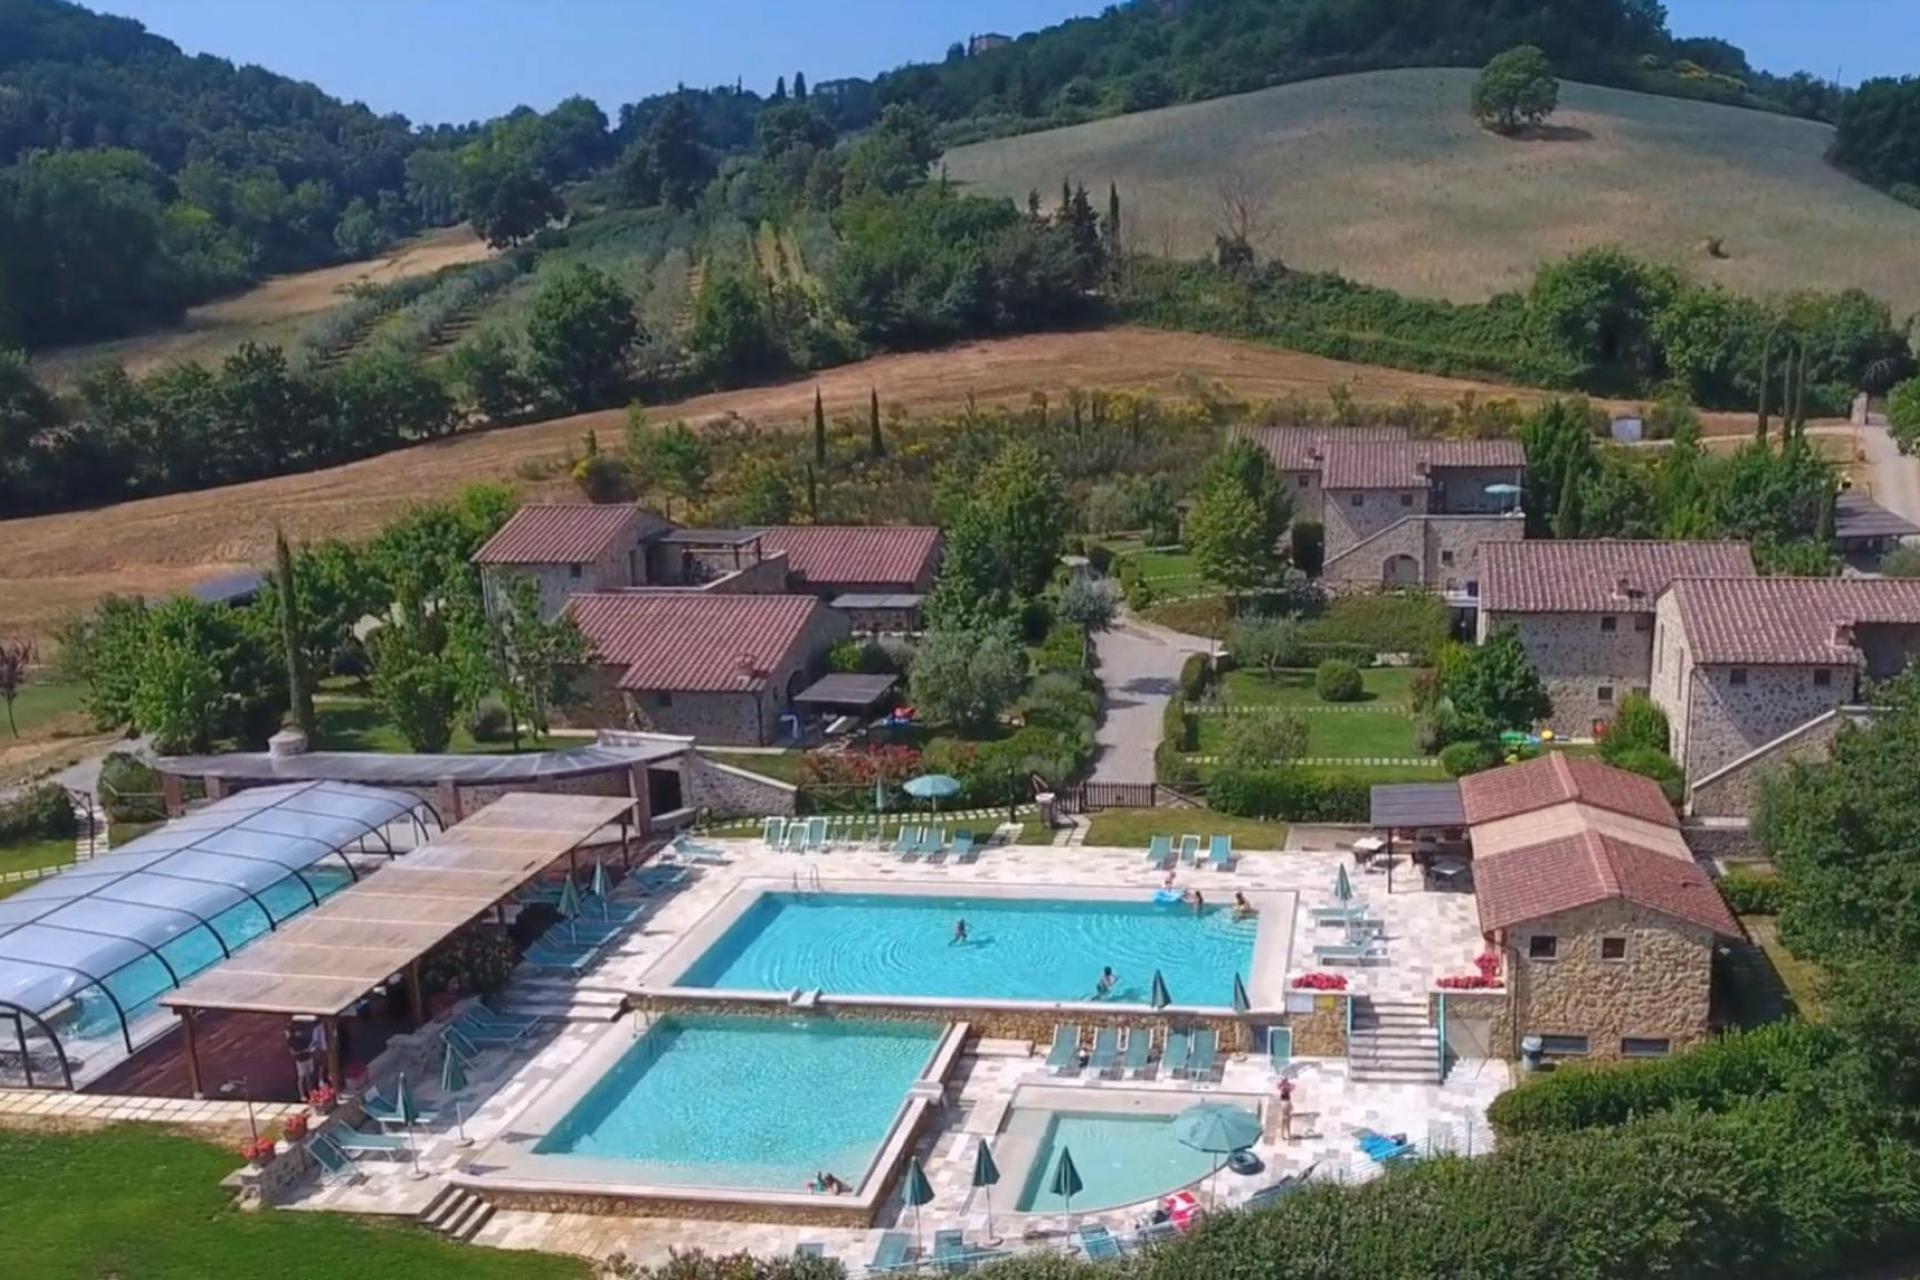 Toskanisches Country Resort mit 4 schönen Pools